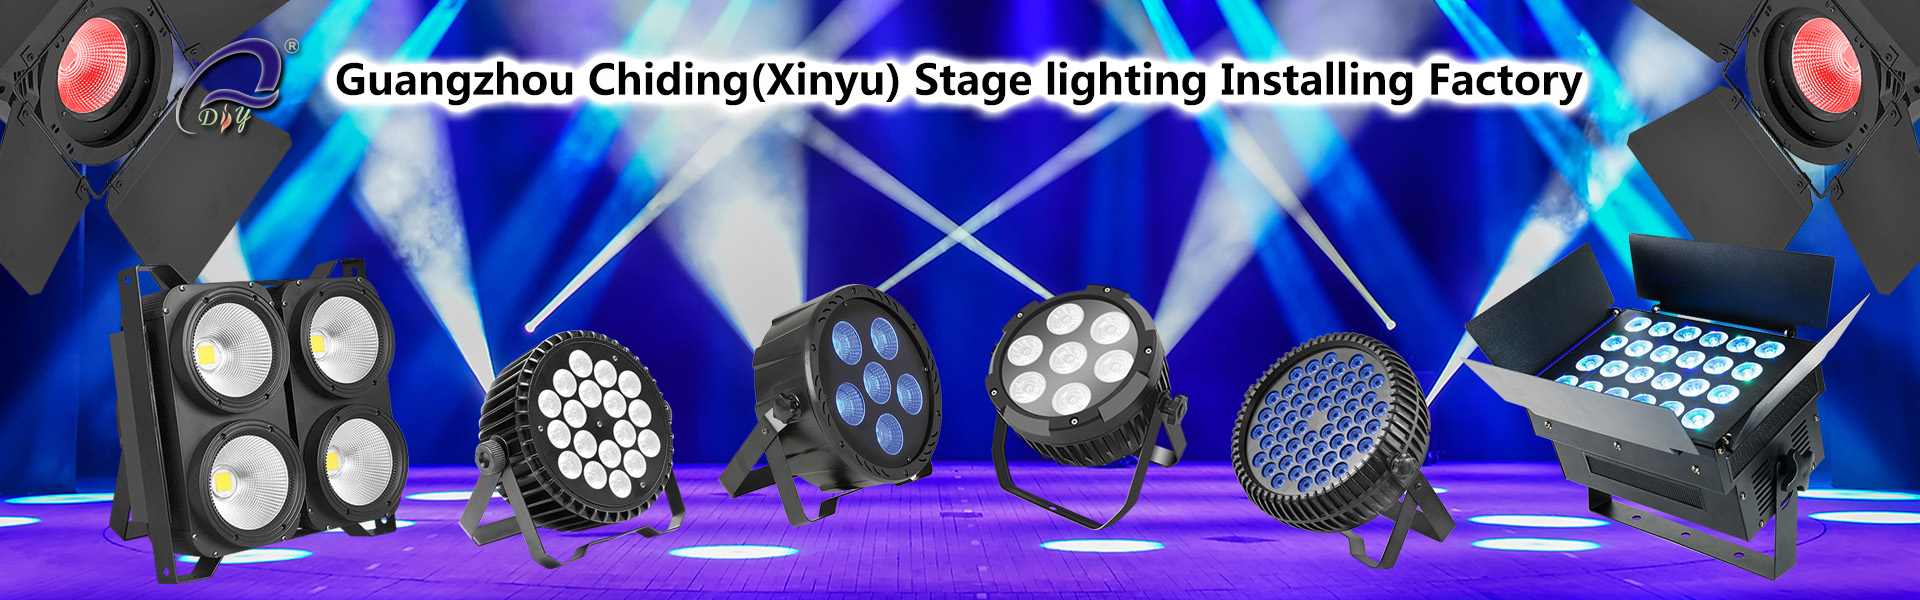 LED 、 照明 ム ー,guangzhou chiding stage lighting co ltd